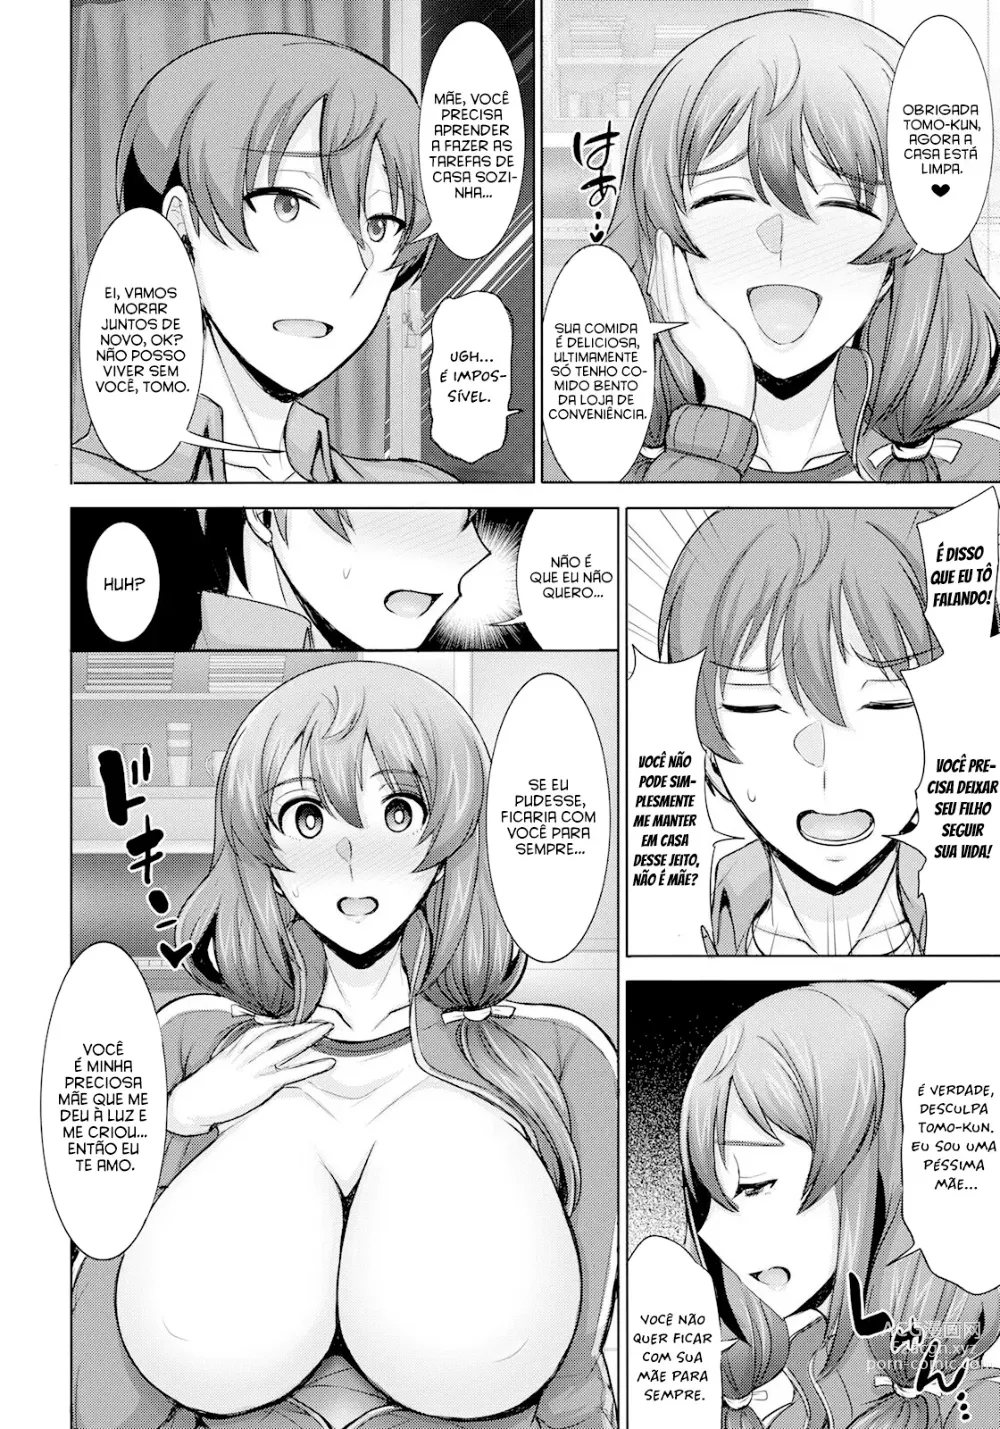 Page 4 of manga Dame Haha dakedo Suki nanda! - useless mother, but I love her!